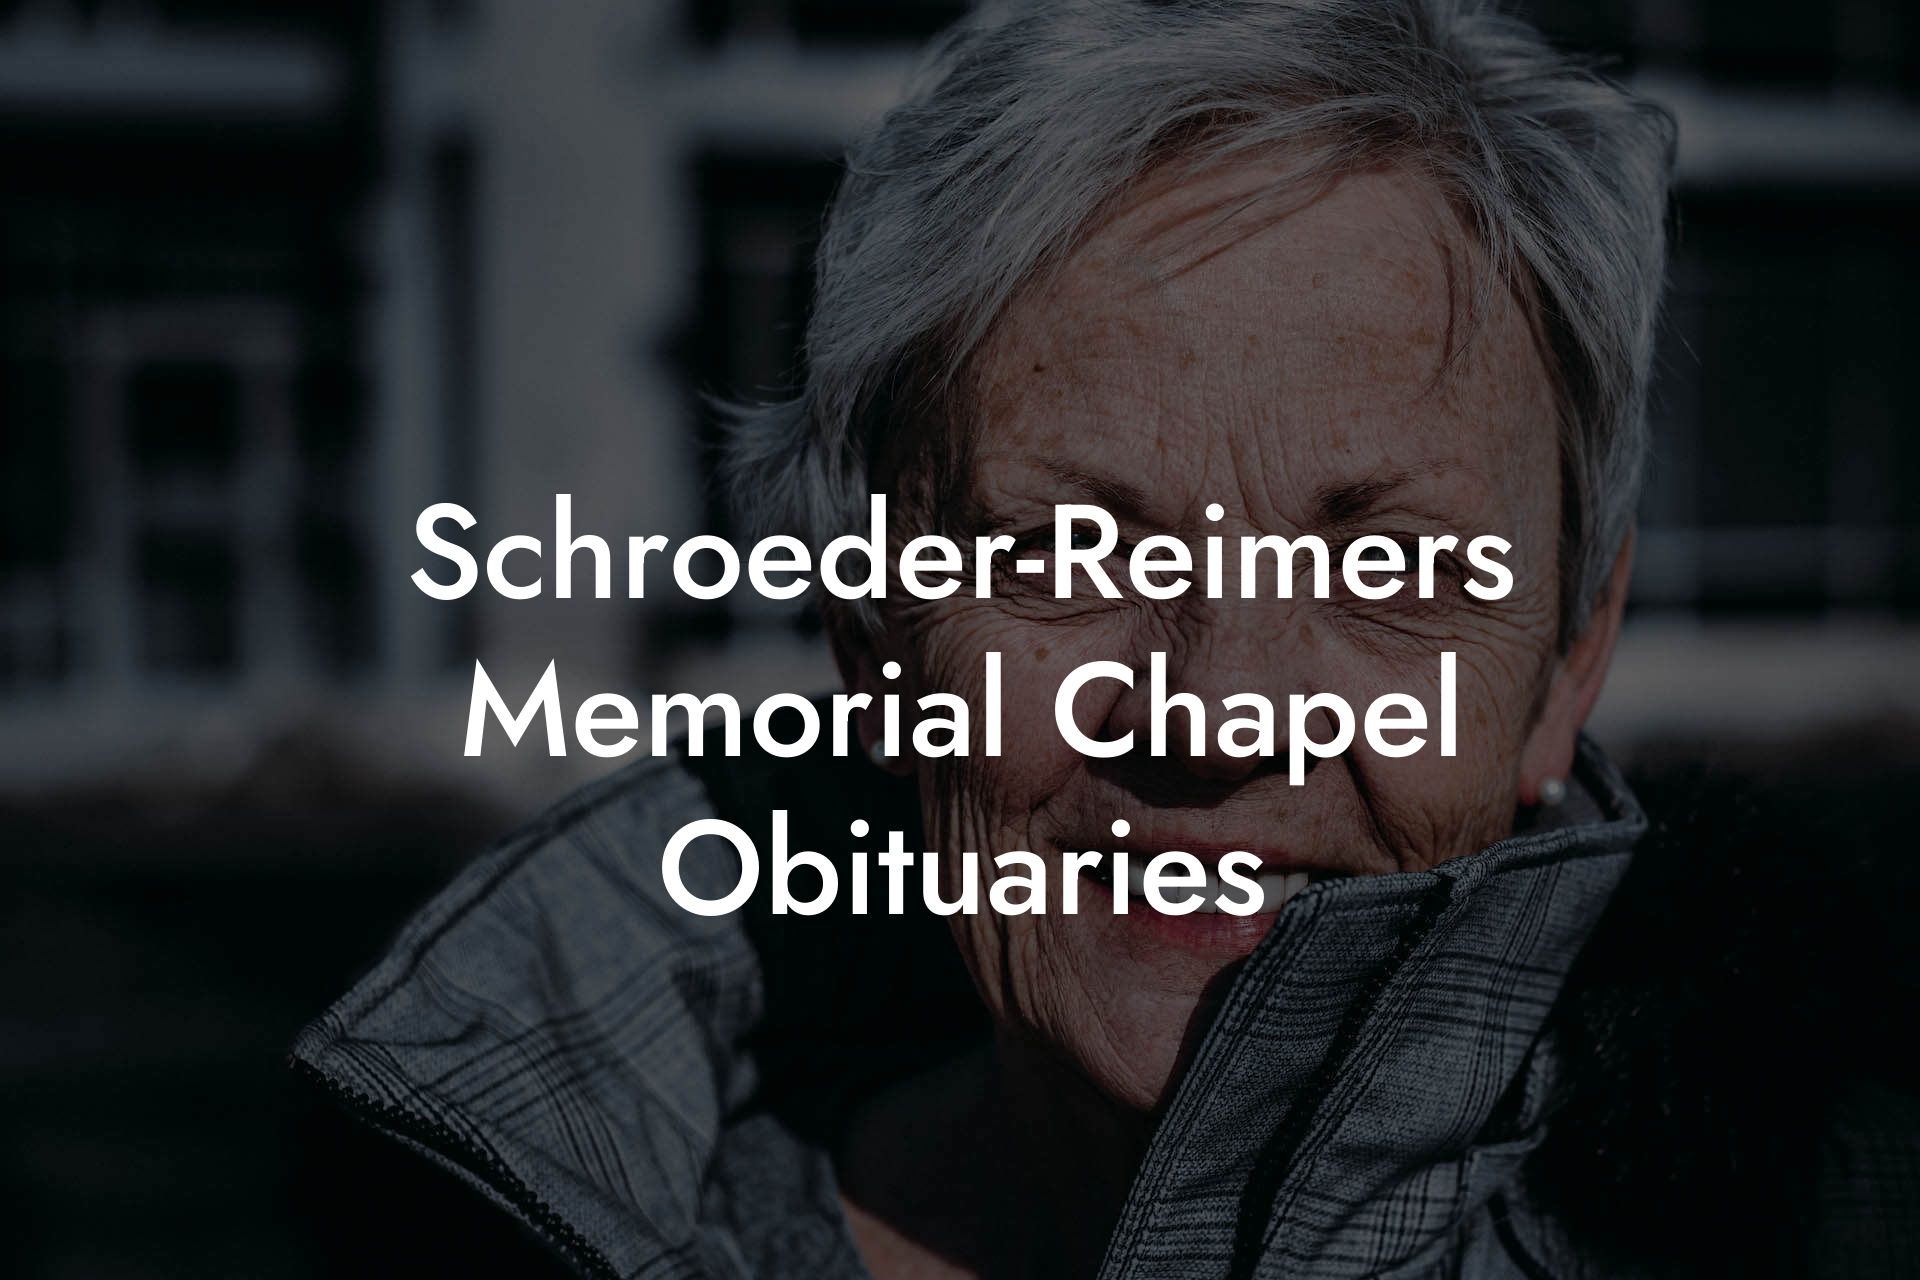 Schroeder-Reimers Memorial Chapel Obituaries